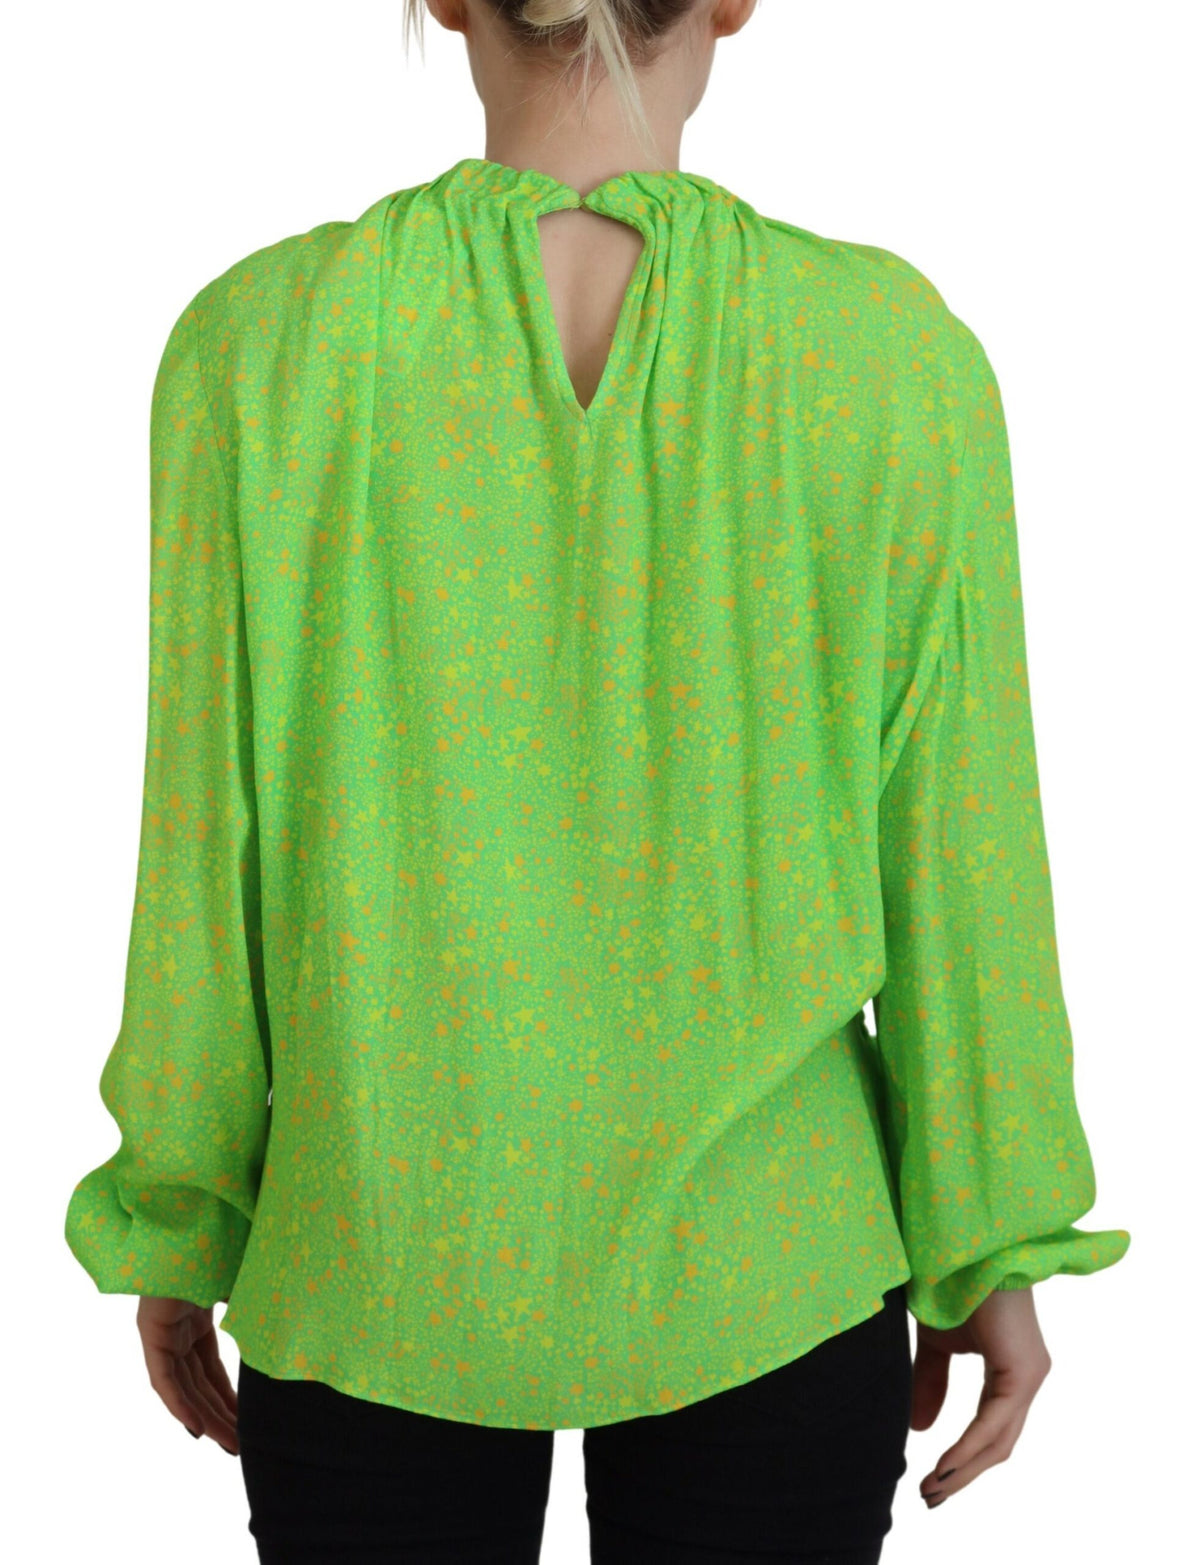 Dsquared² Green Stars Print Viscose Long Sleeves Blouse Top